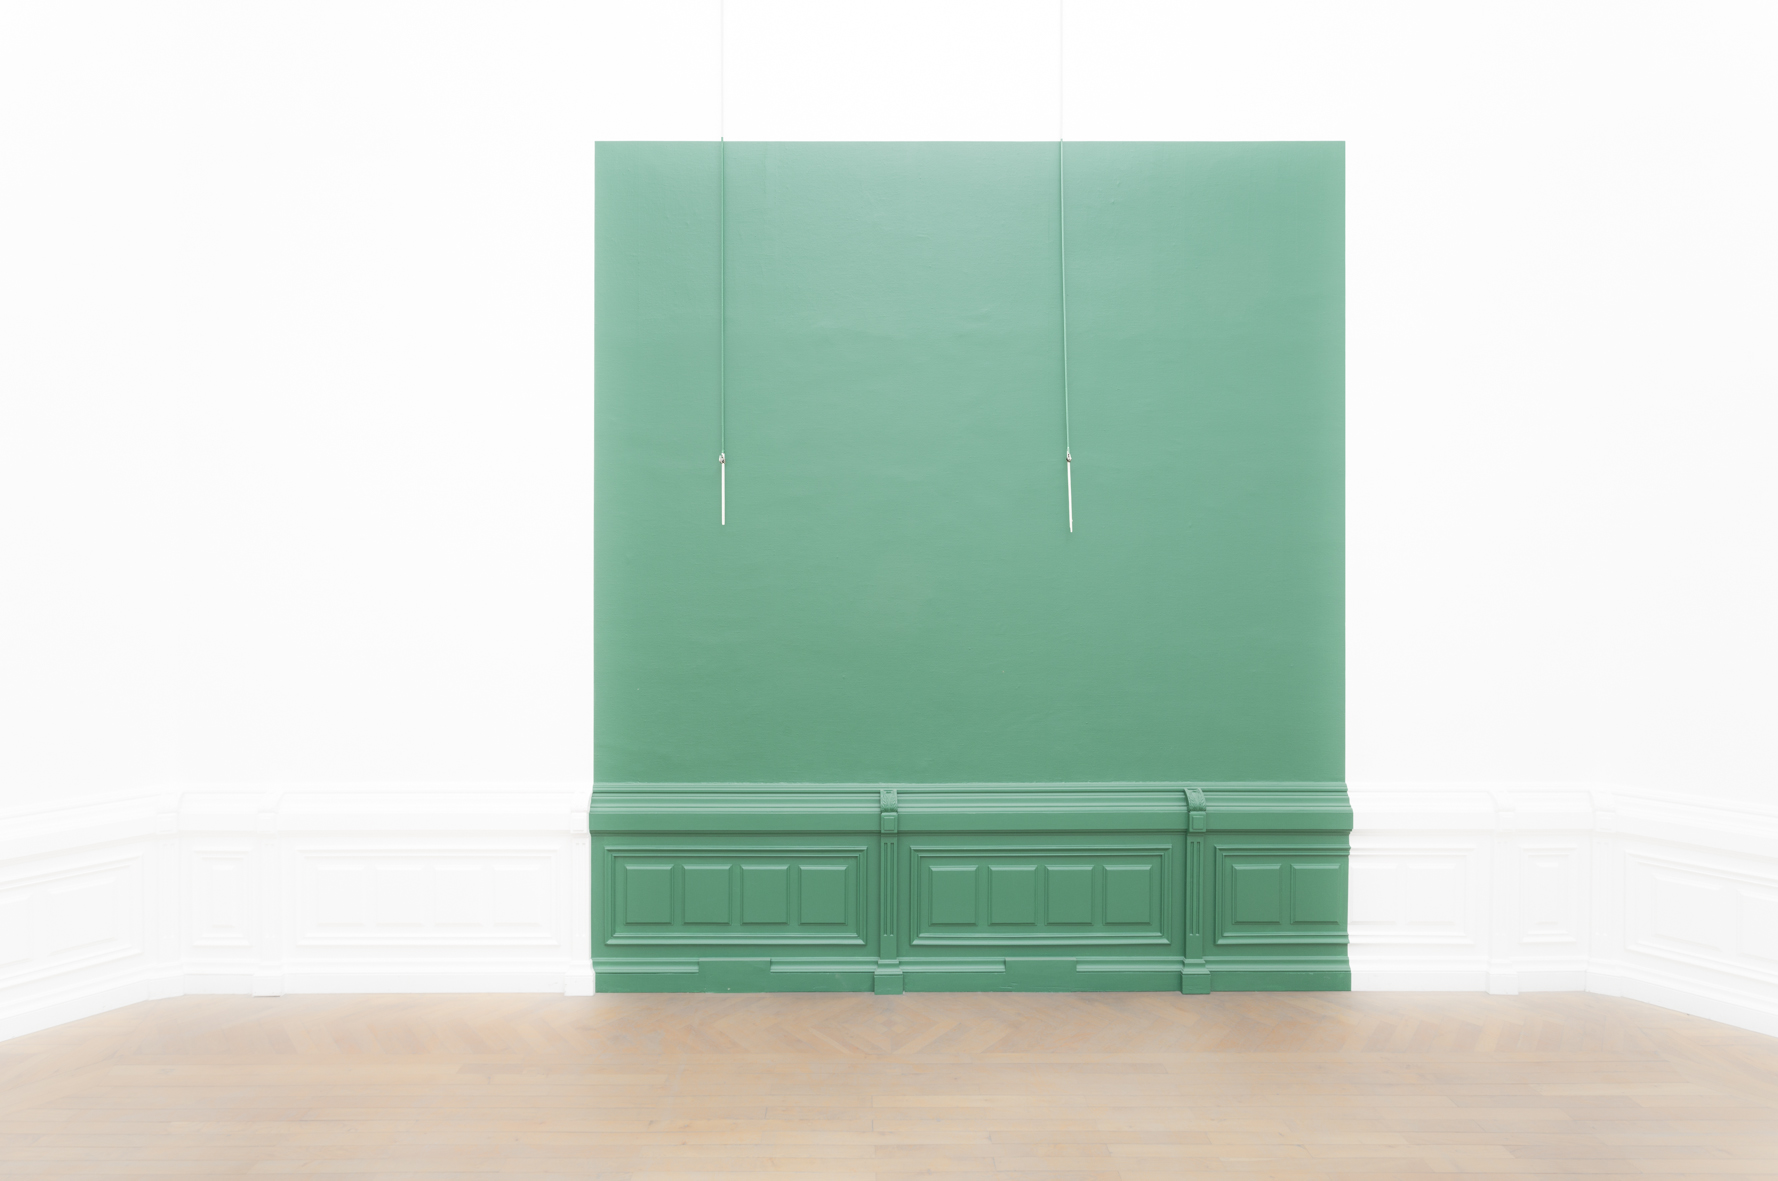 Luca Gilli, Vert, Un musée après, 2014